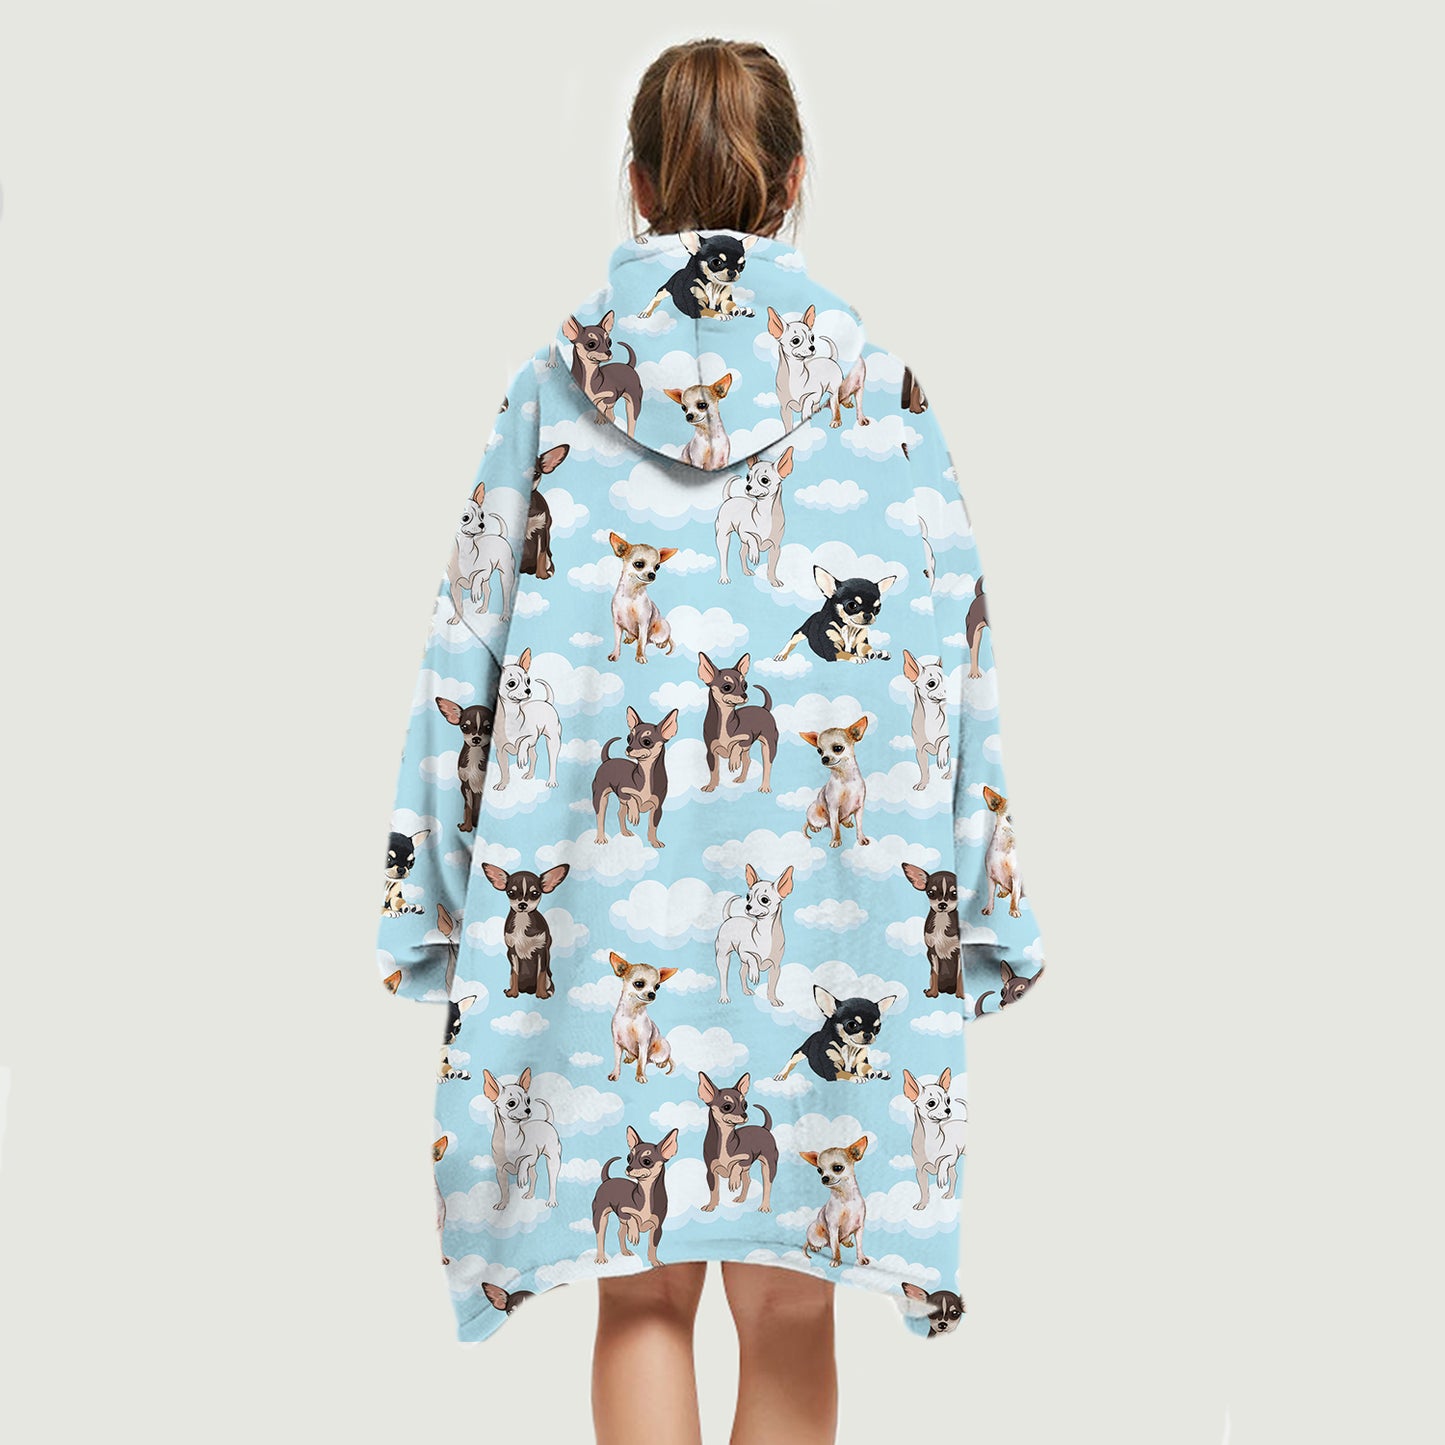 I Love Clouds - Chihuahua Fleece Blanket Hoodie